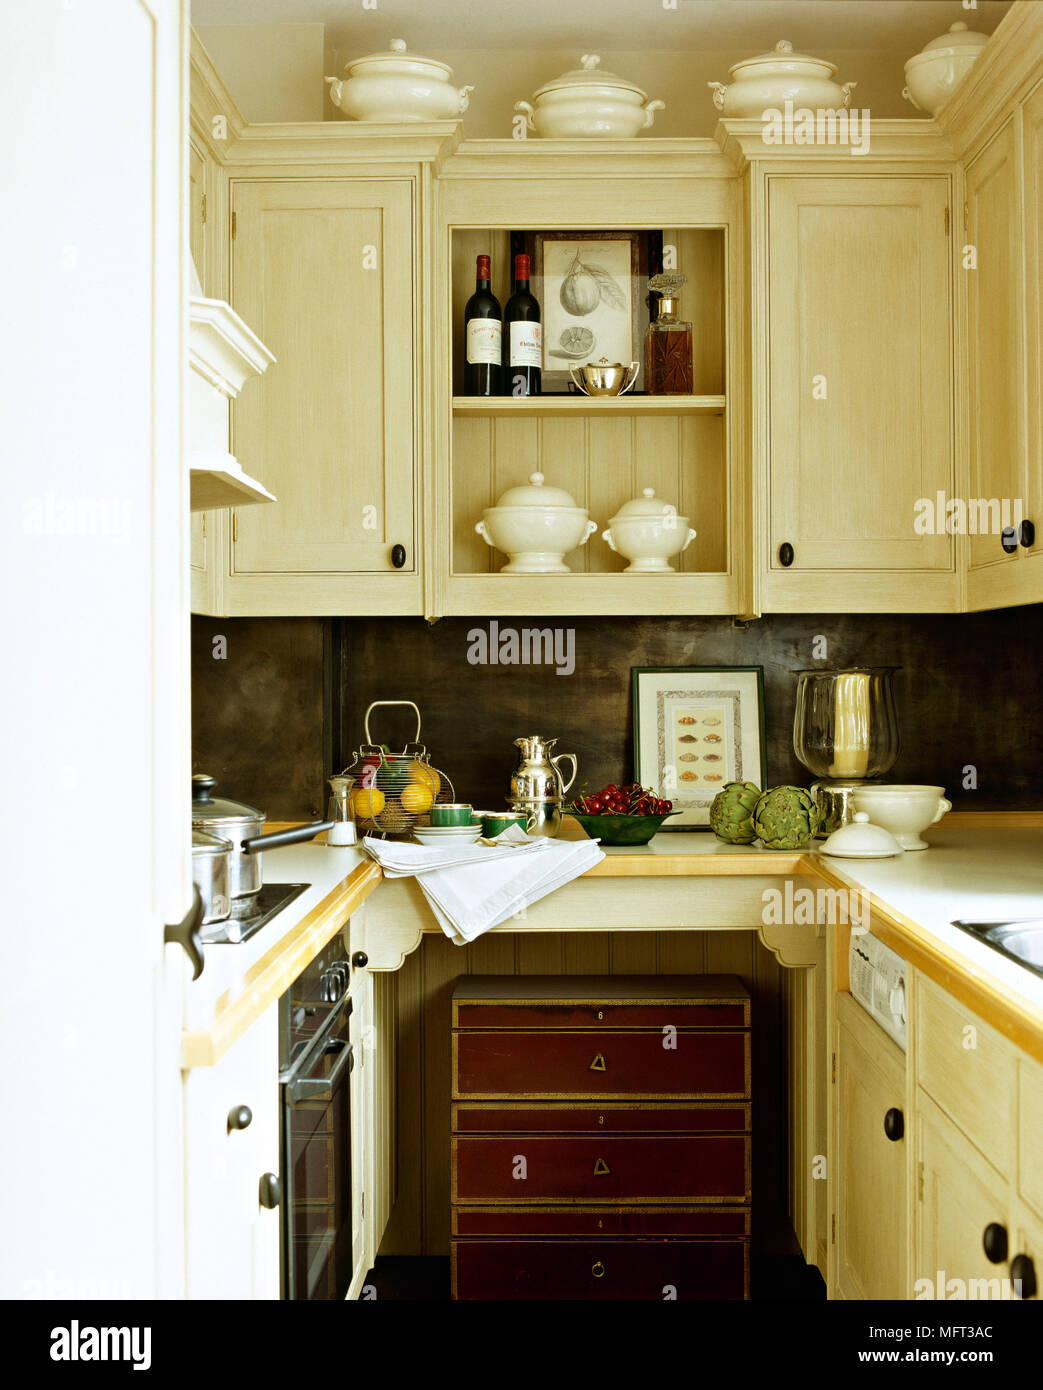 https://c8.alamy.com/comp/MFT3AC/modern-neutral-kitchen-painted-units-interiors-kitchens-small-compact-galley-MFT3AC.jpg